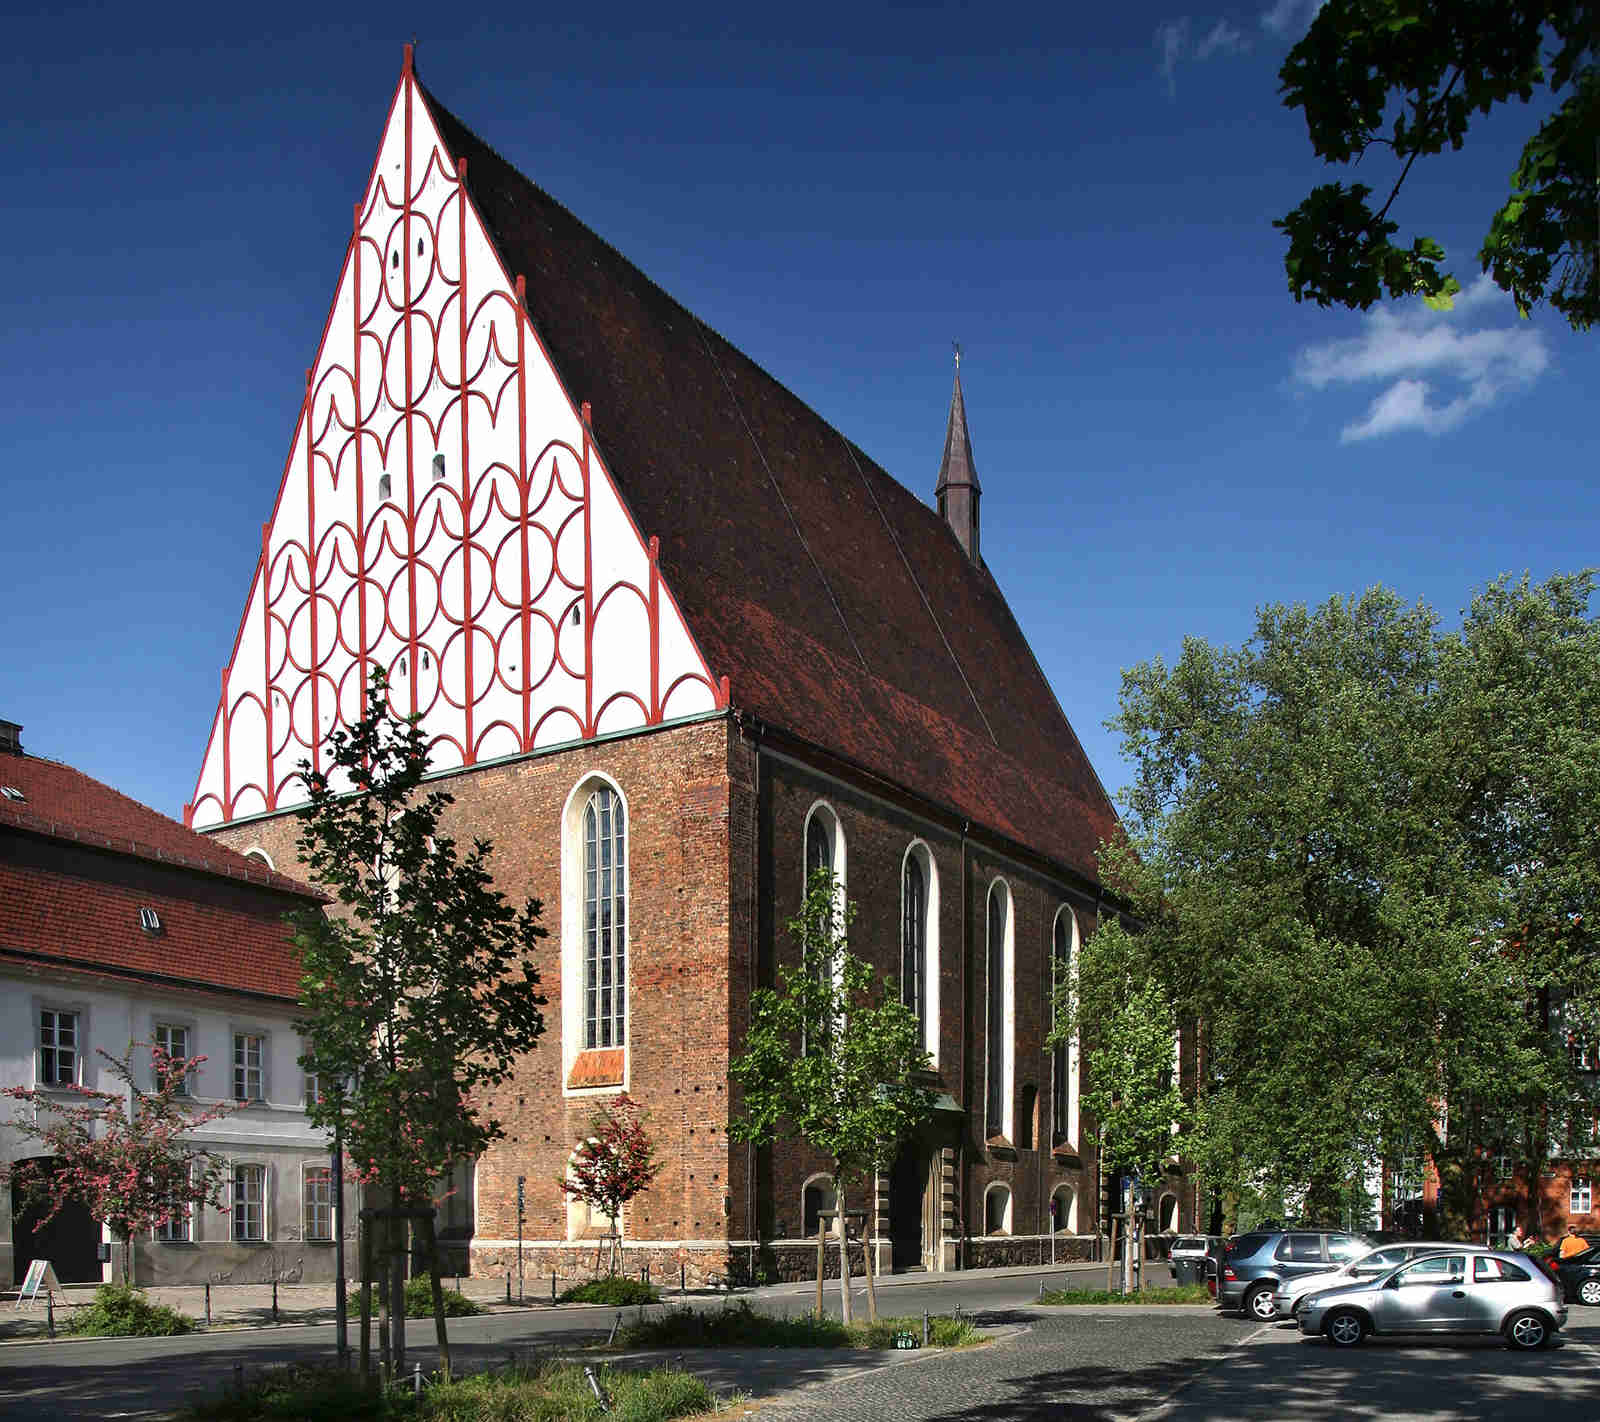 Franciscan monastery church, Frankfurt (Oder)